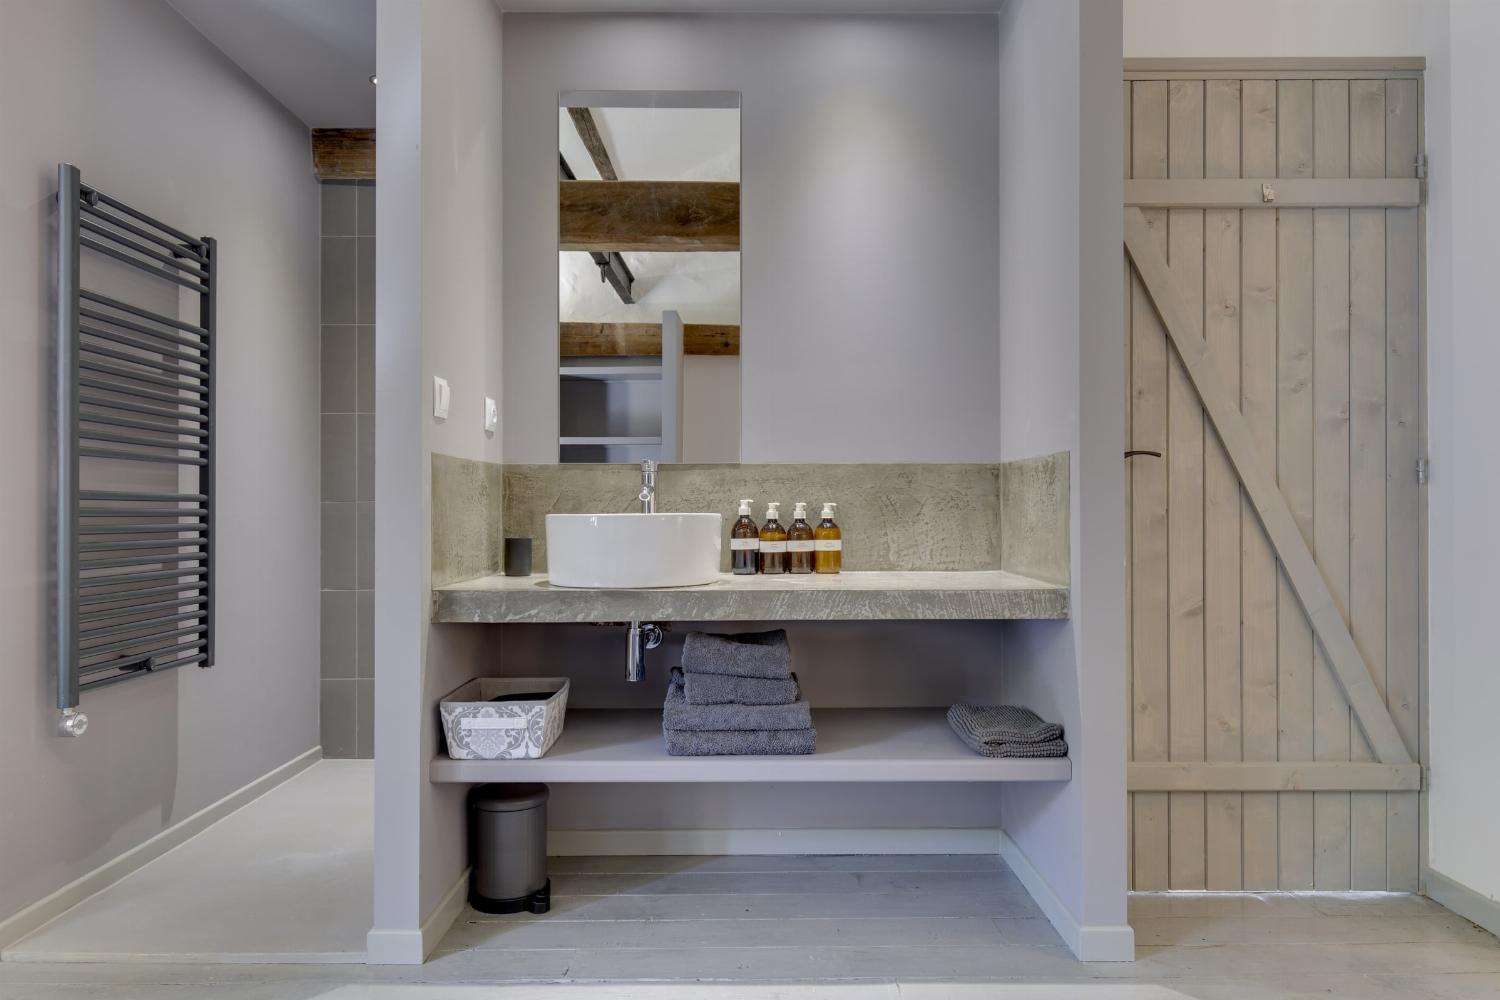 Bathroom | Holiday accommodation in Dordogne